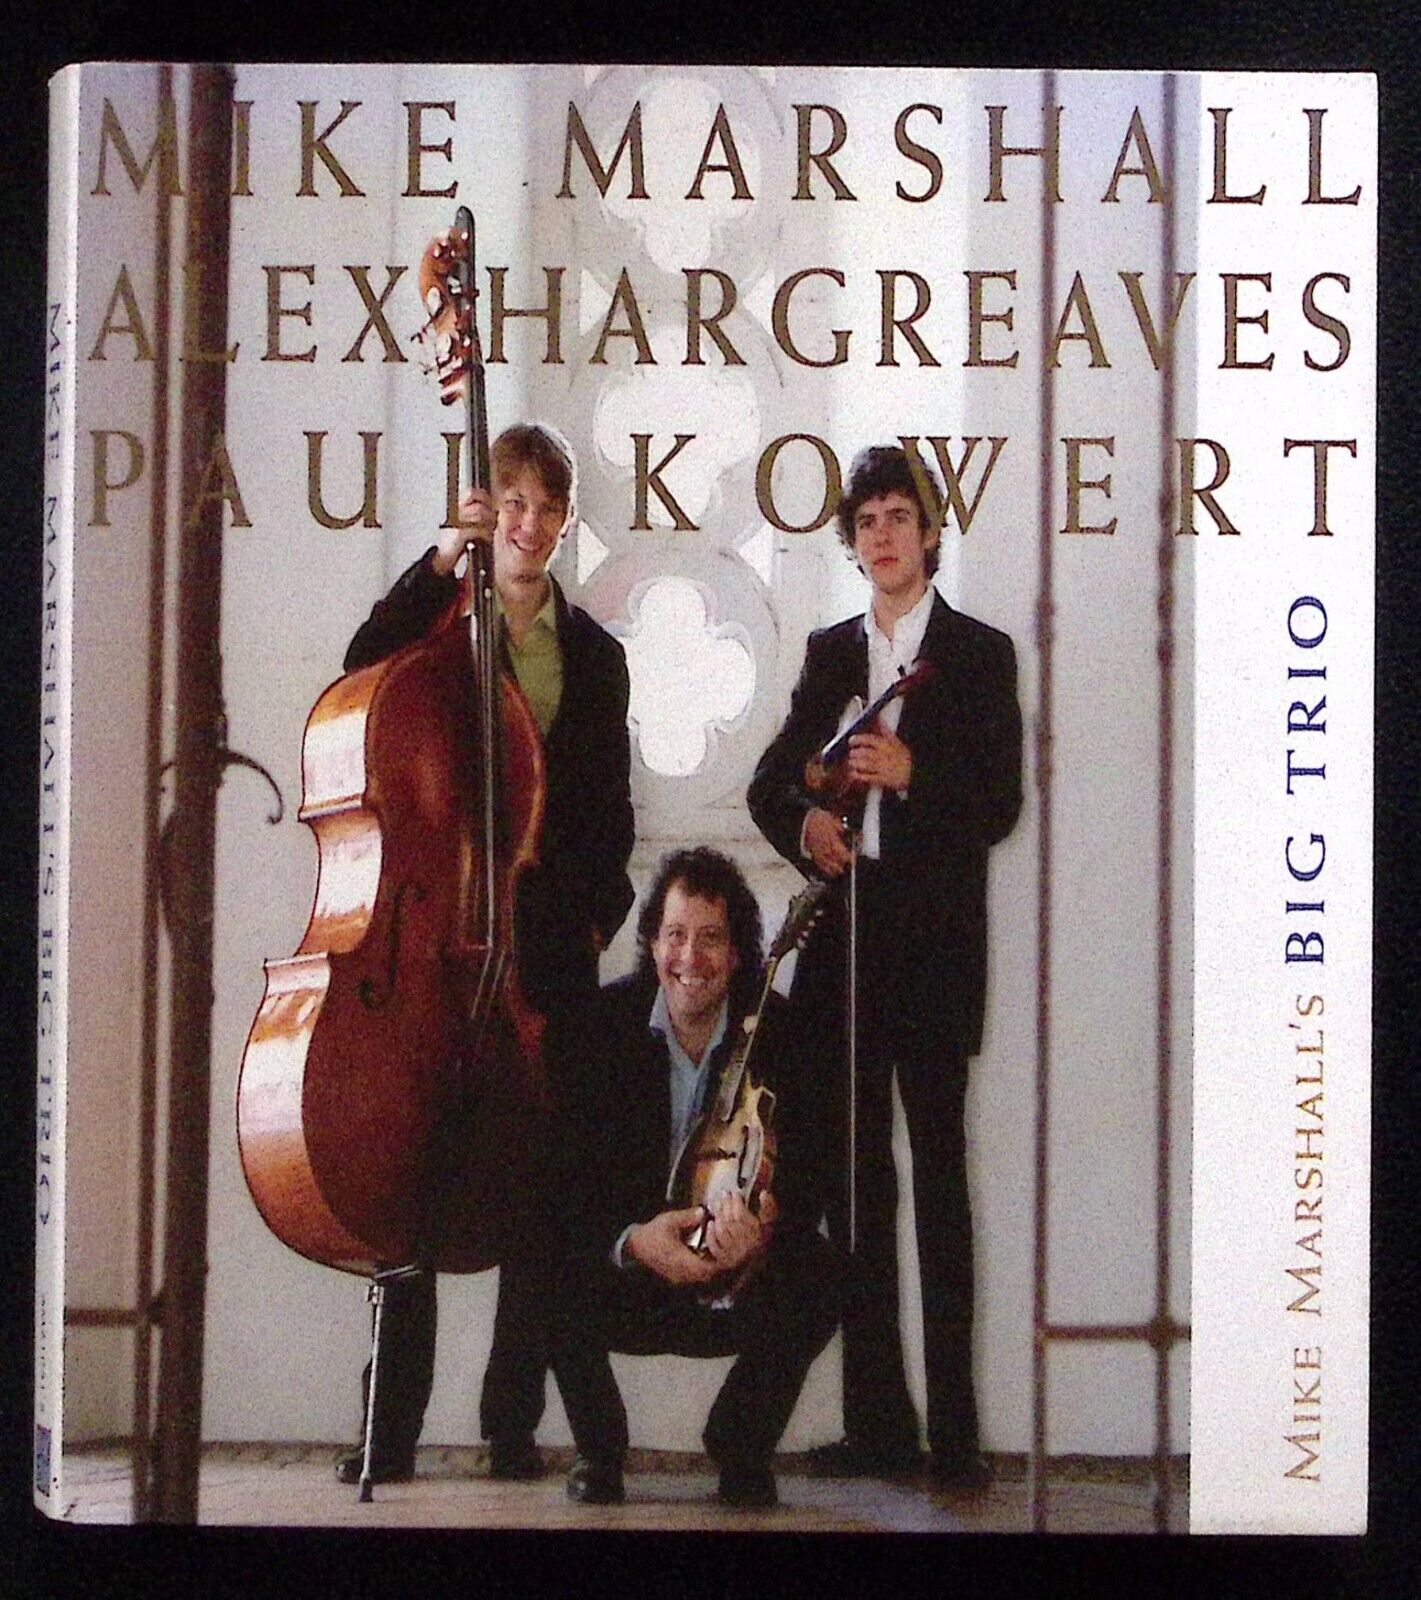 MIKE MARSHALL'S BIG TRIO ALEX HARGREAVES PAUL KOWERT ADVENTURE MUSIC CD 1477